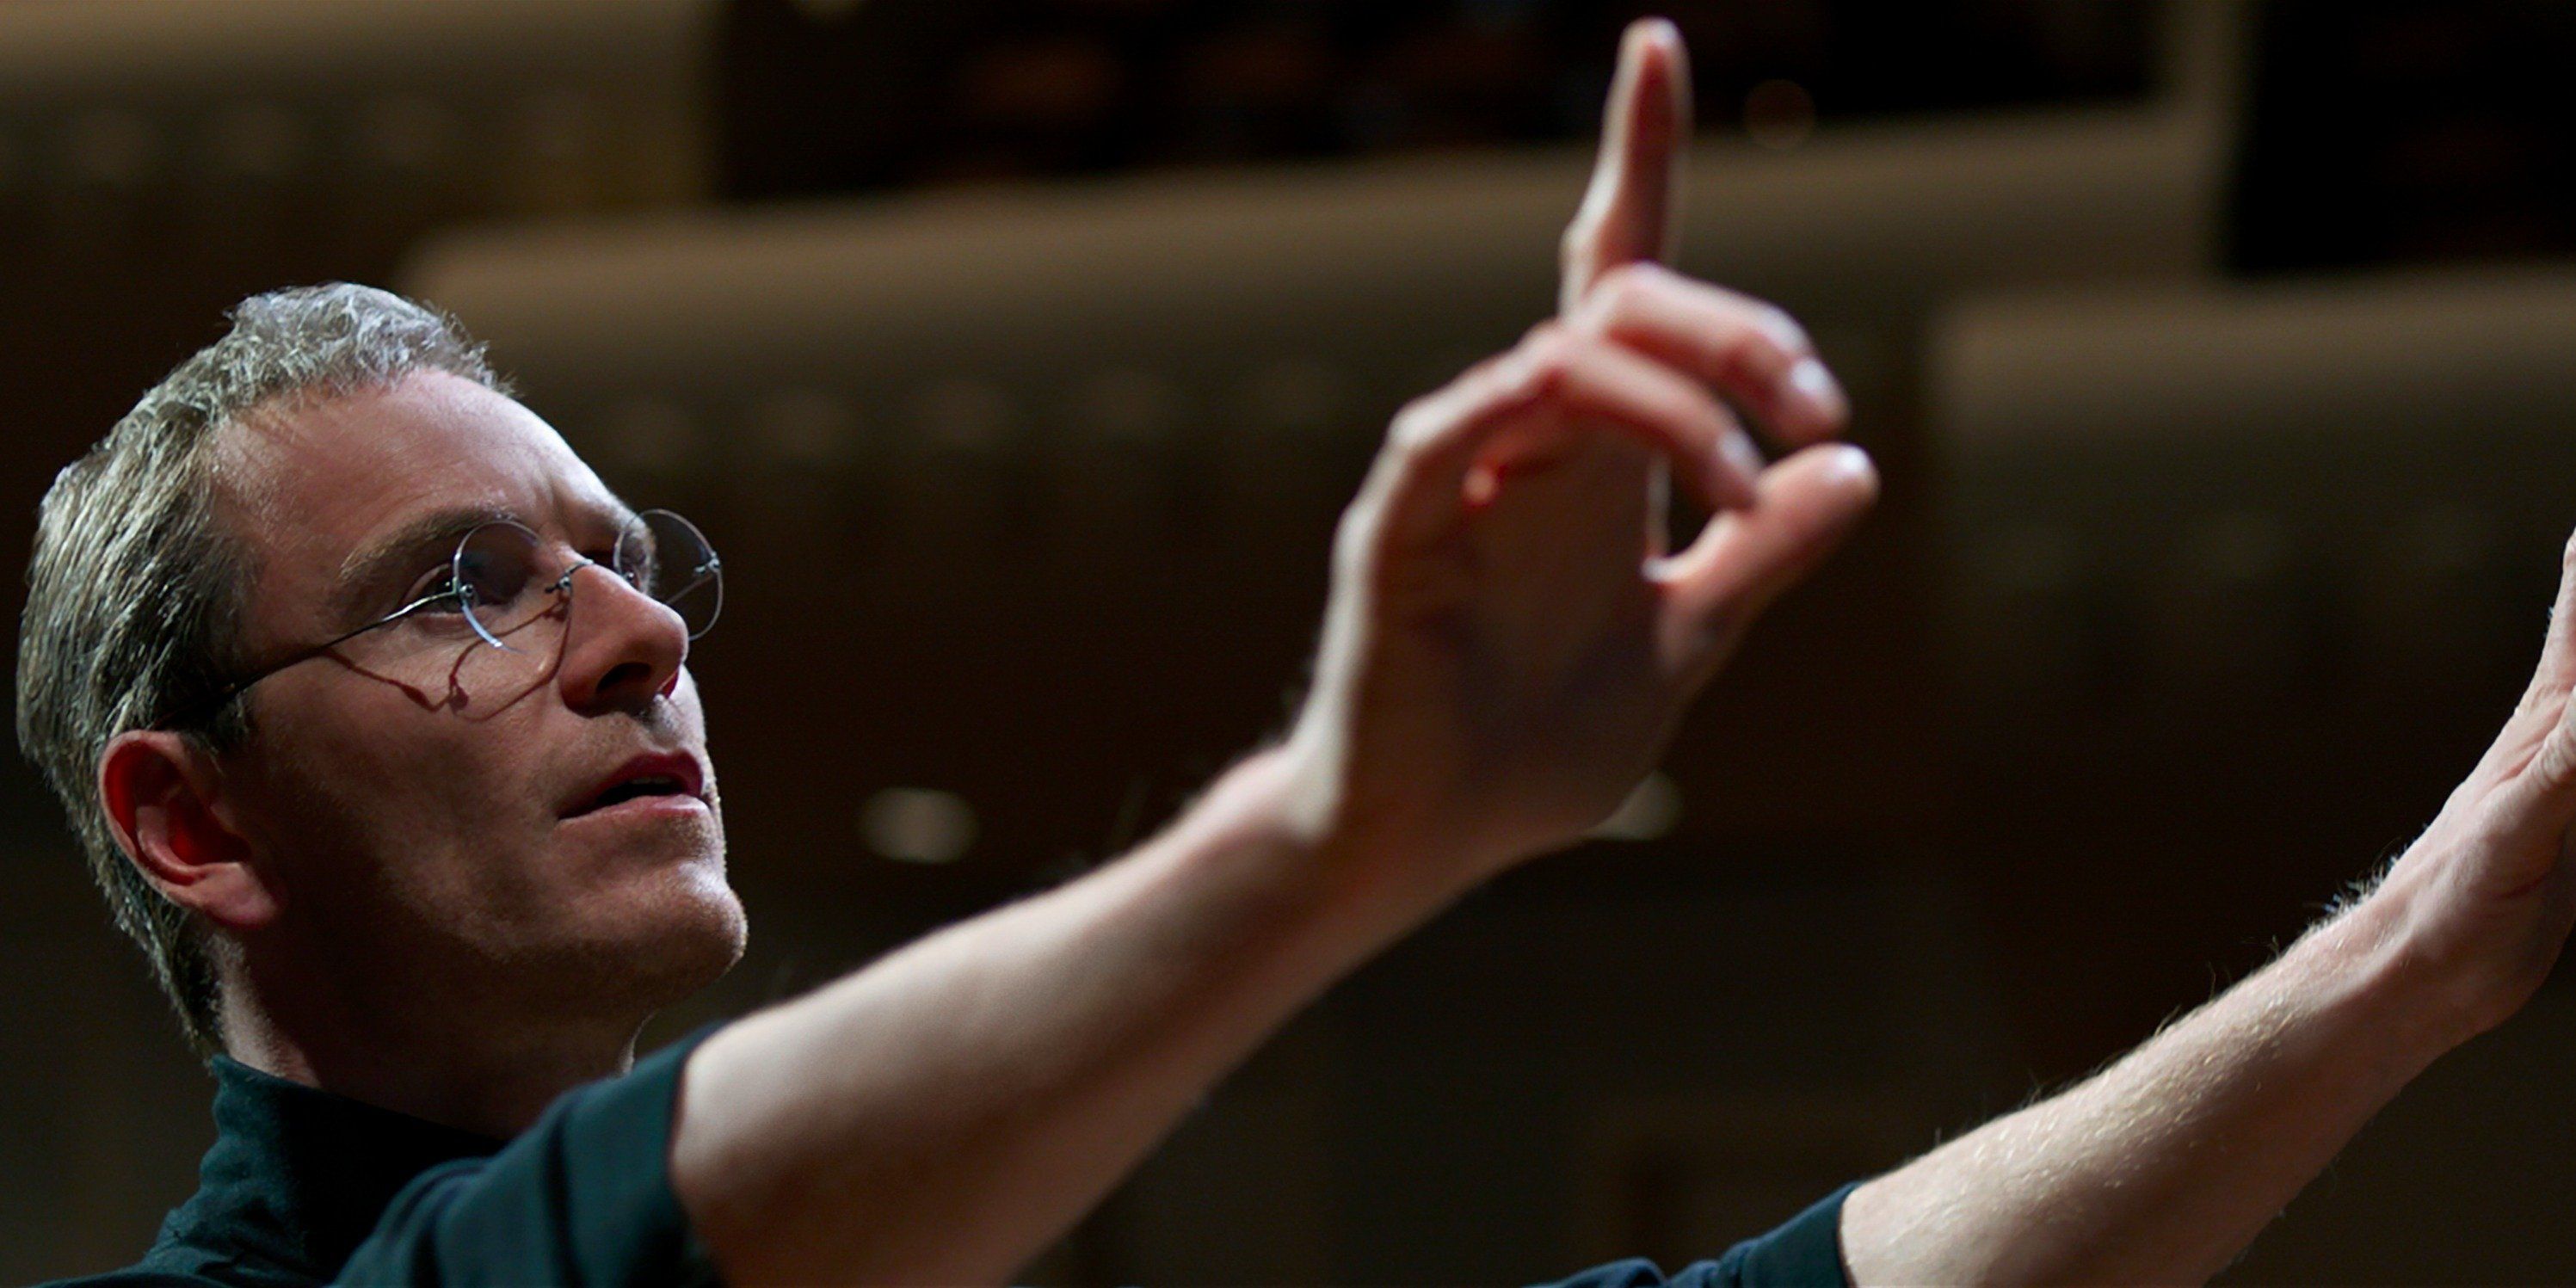 Technologijų ekspertas filme „Steve Jobs“ neatpažįsta legendinio „Apple“ įkūrėjo